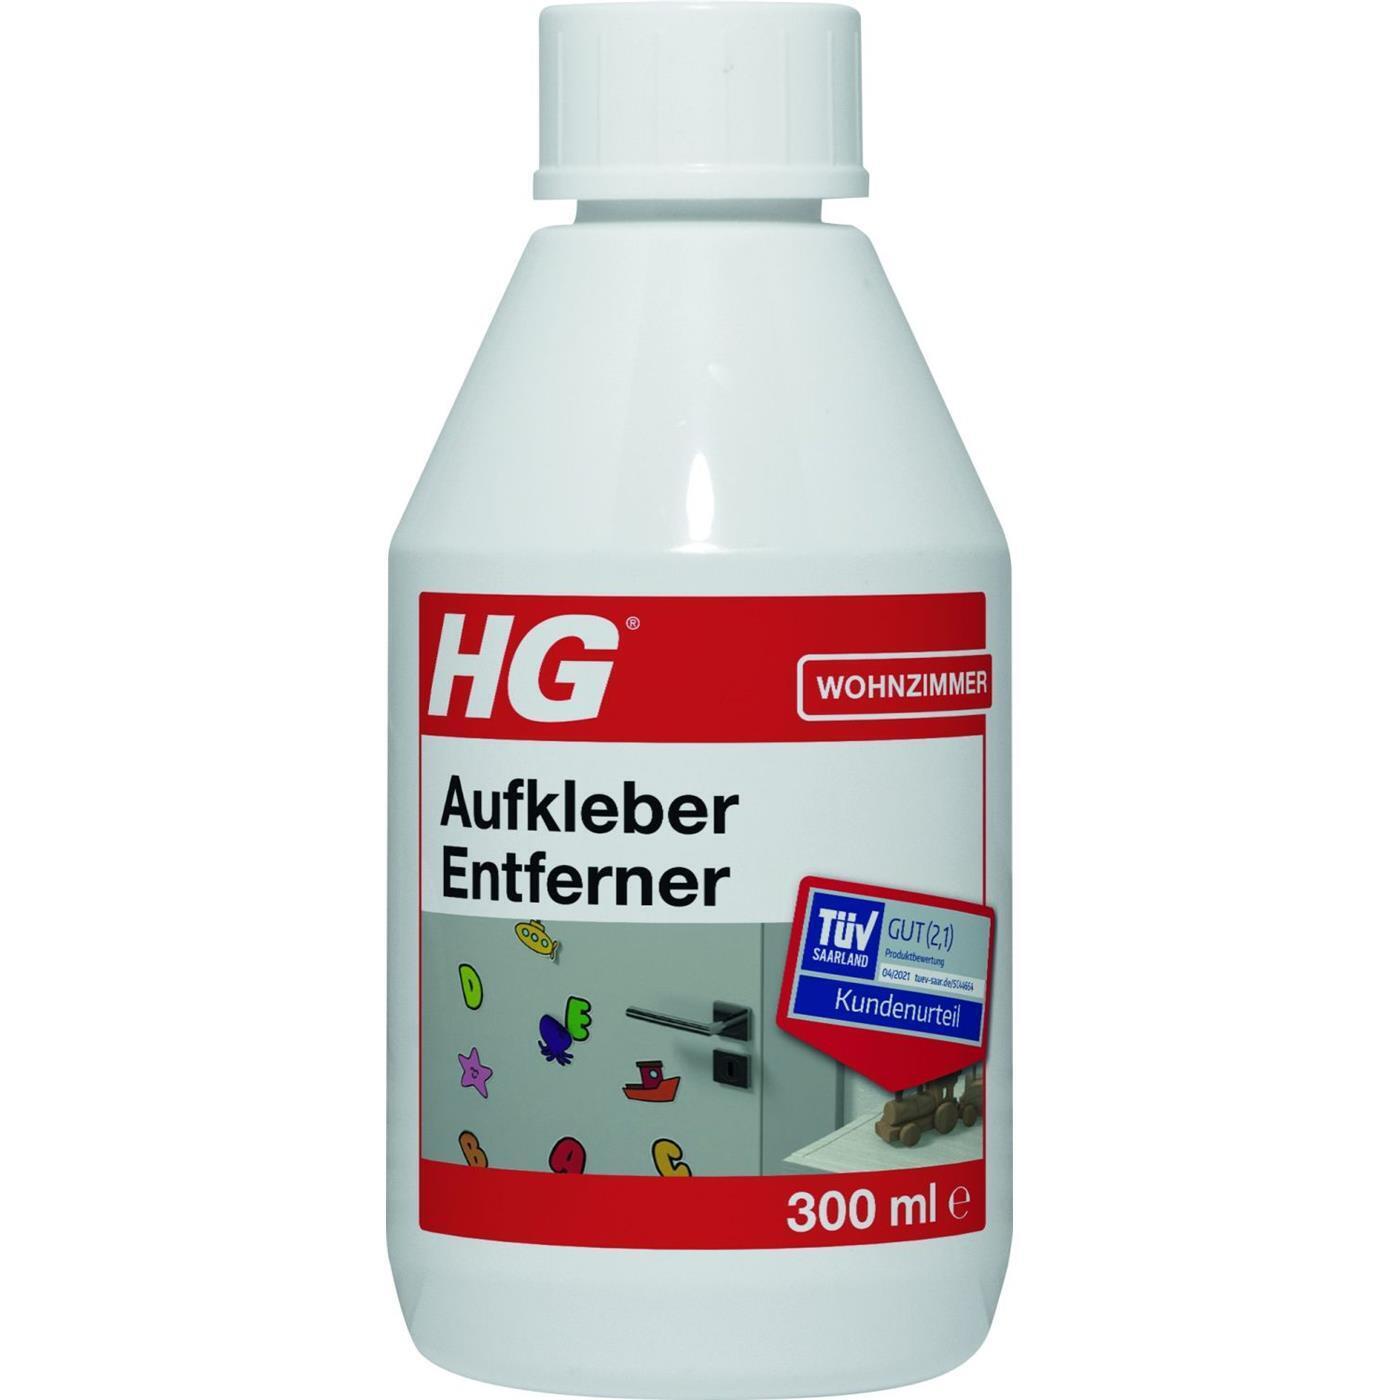 HG Aufkleber Entferner Reiniger - 300 ml